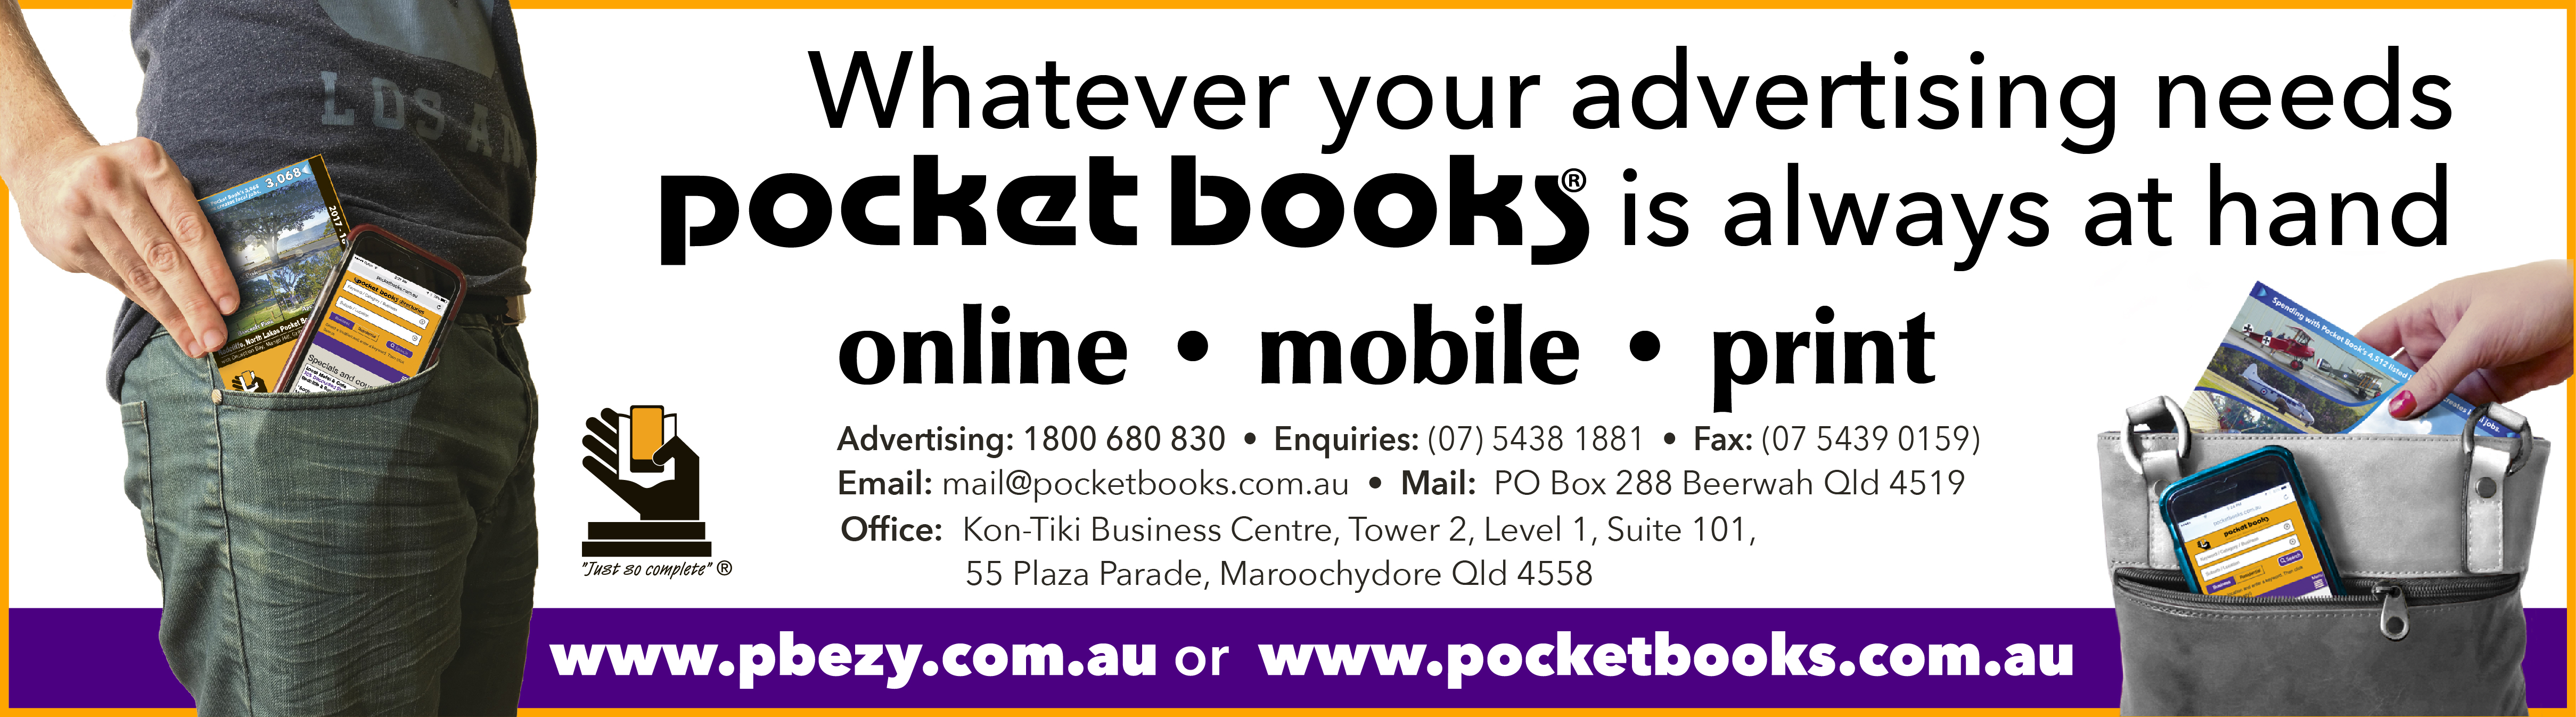 POCKET BOOKS advertisement